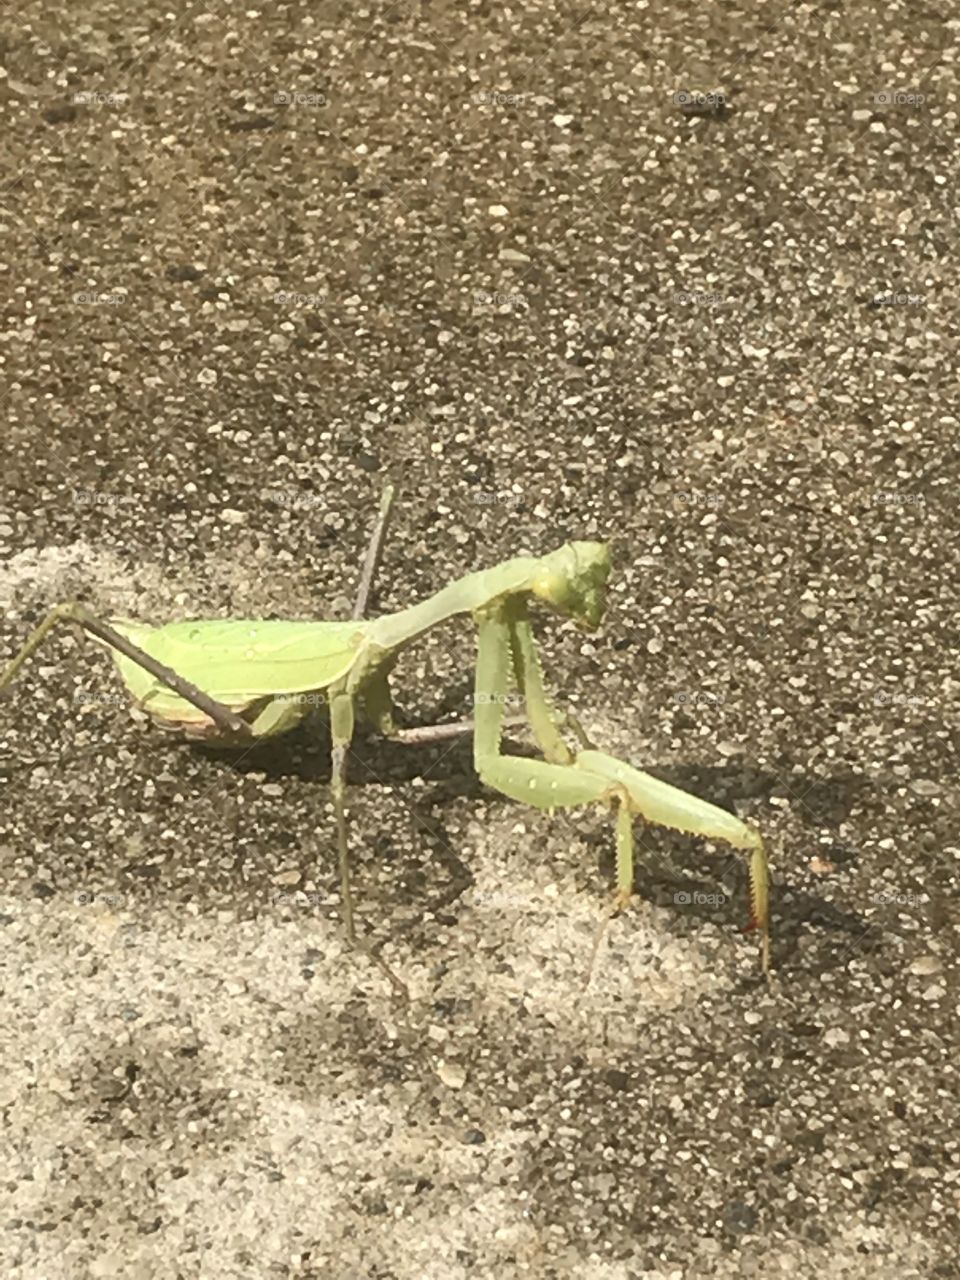 Preying mantis 